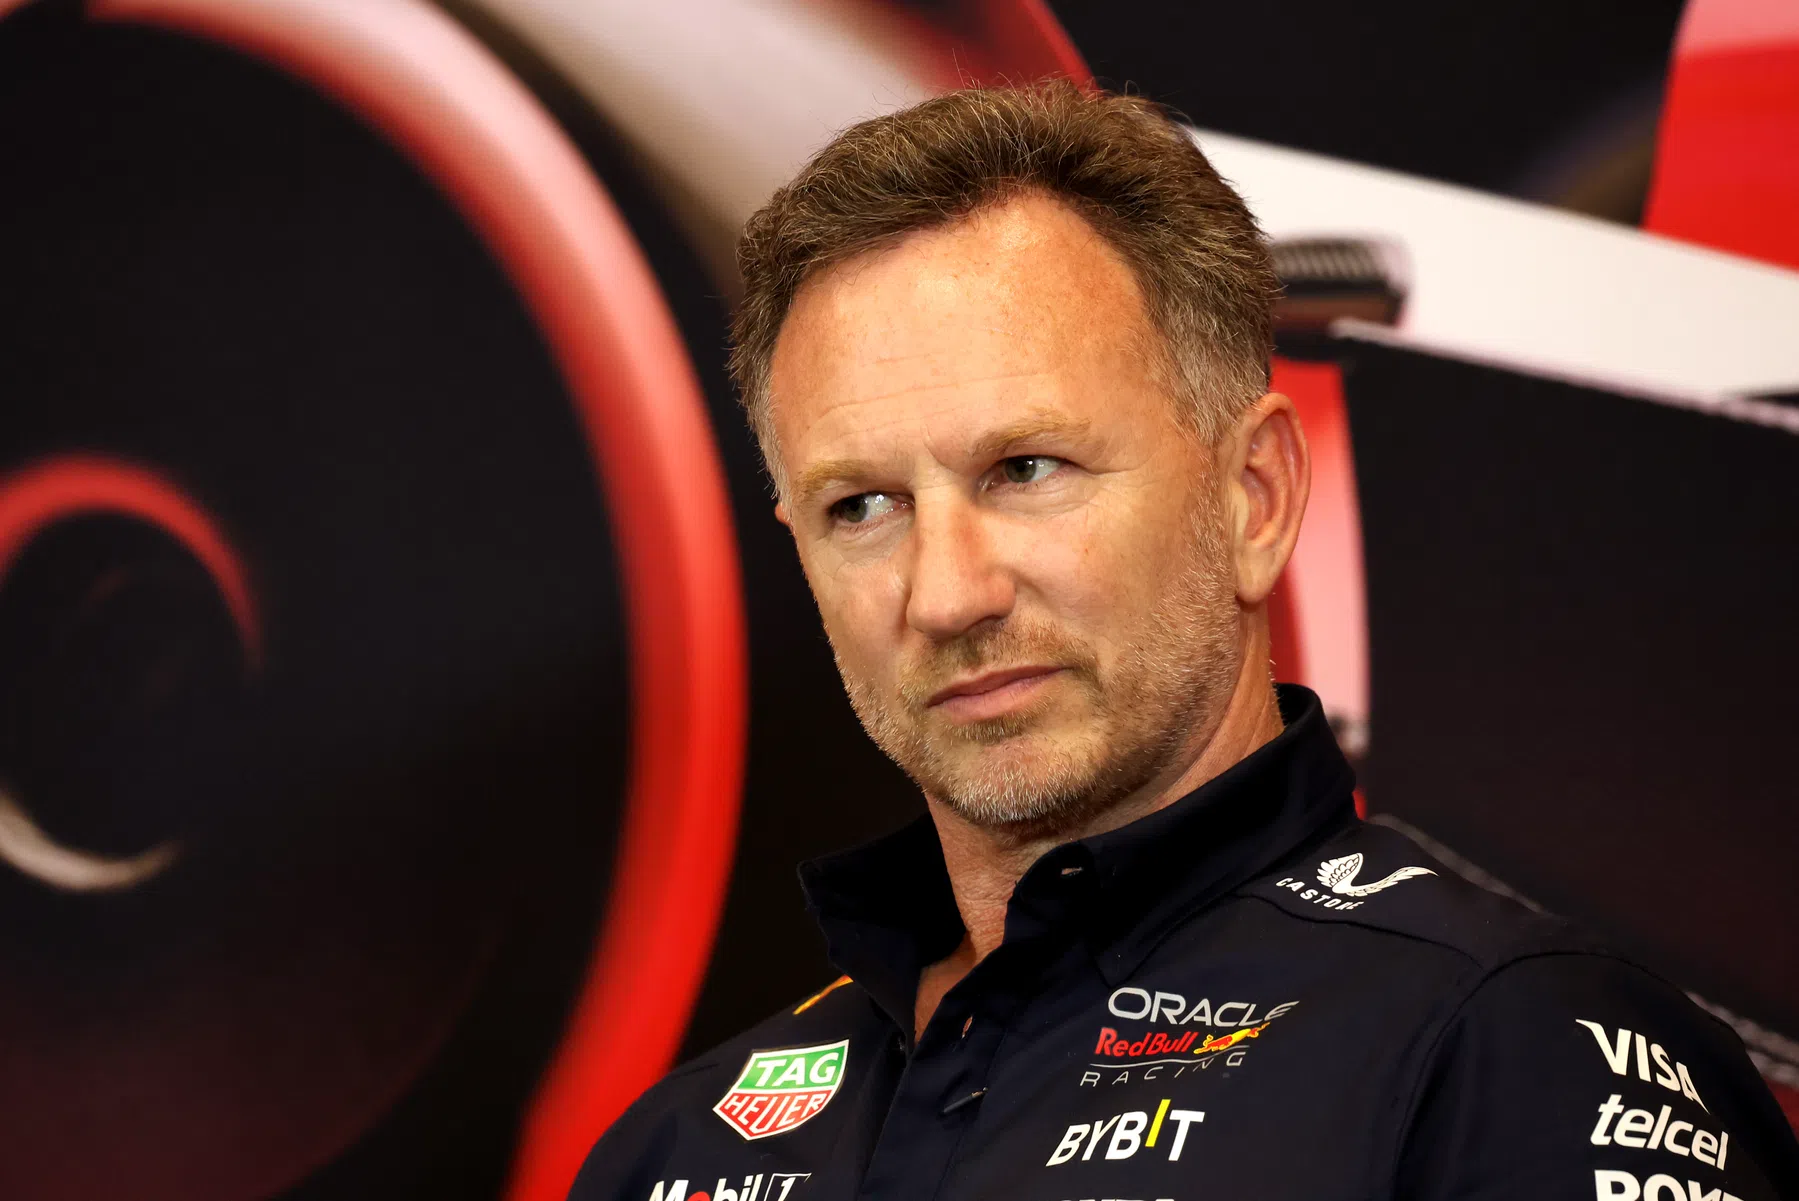 Horner responds to Wolff showing interest in Max Verstappen